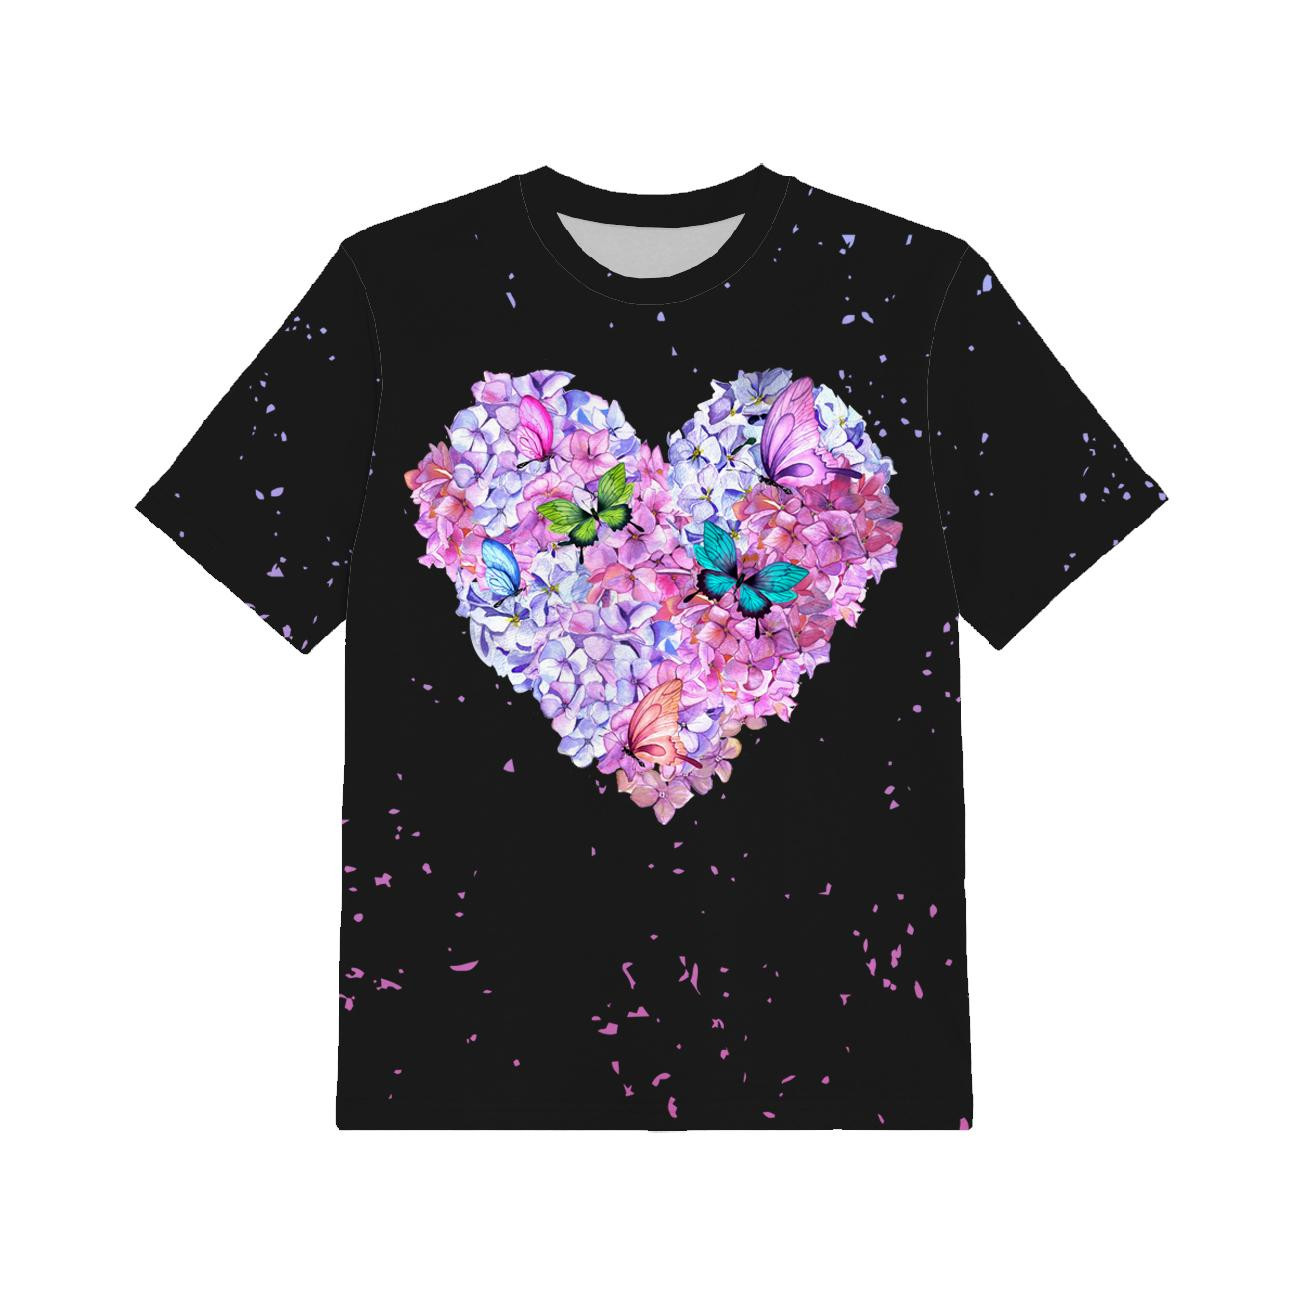 KID’S T-SHIRT - HEART FLOWERS / black - sewing set